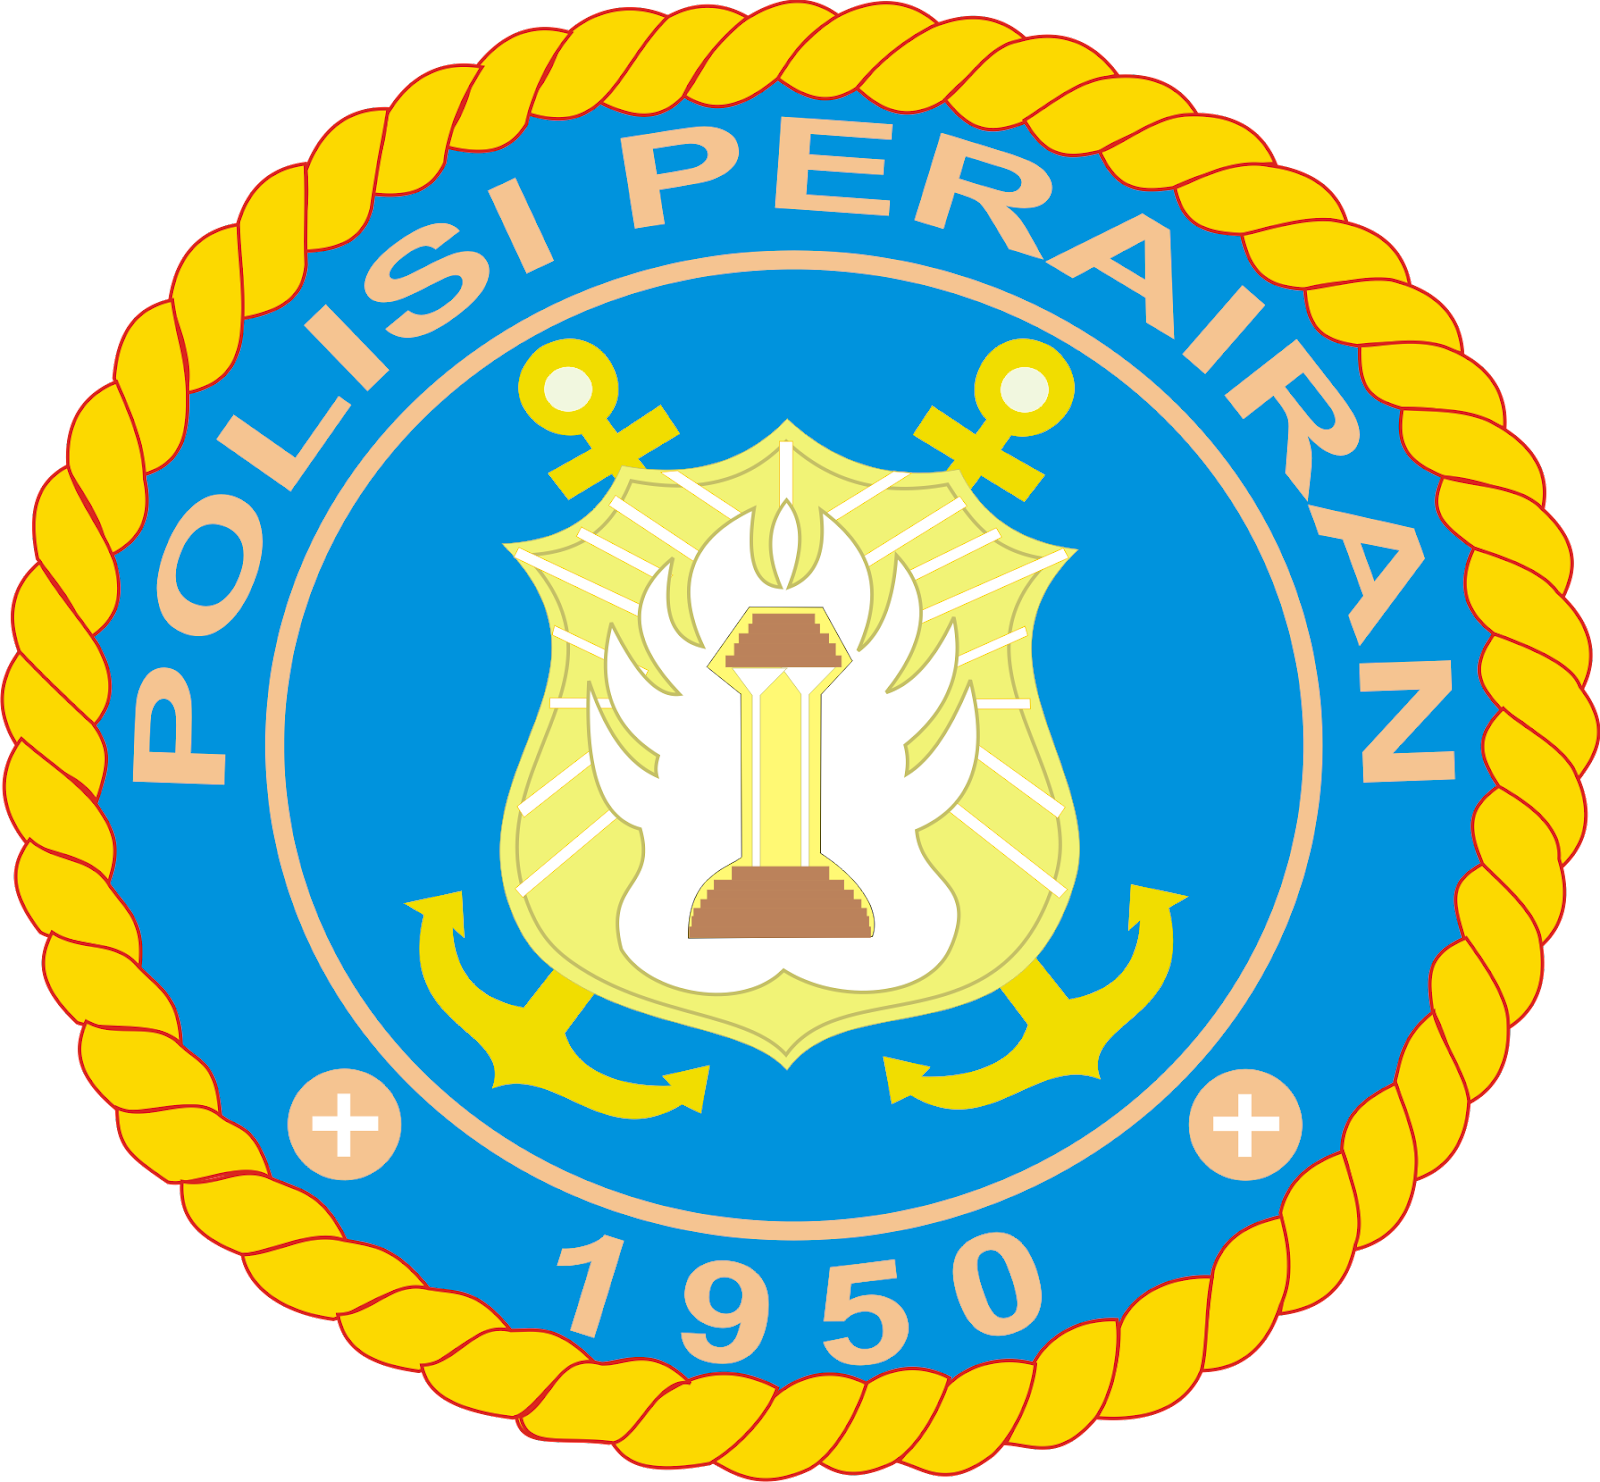 Logo Polisi Perairan Polair Indonesia Ardi La Madi s 